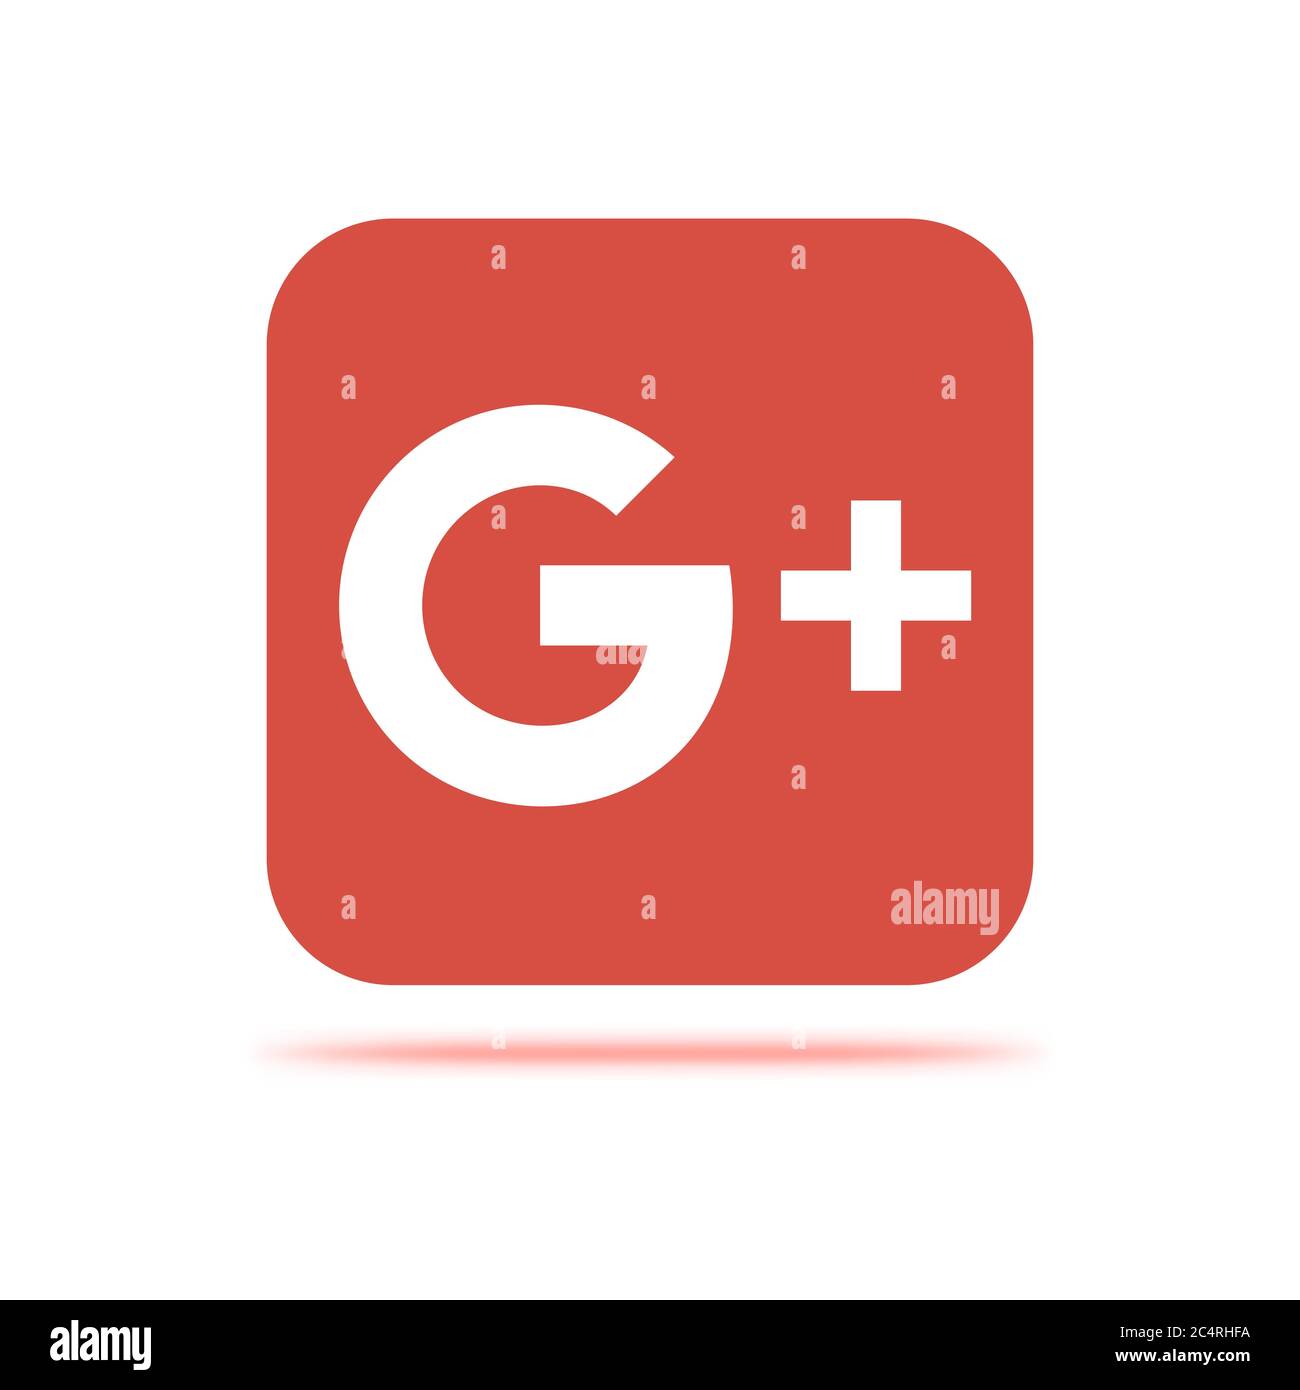 VORONEZH, RUSSIA - JANUARY 31, 2020: Google Plus logo orange square icon with shadow Stock Vector